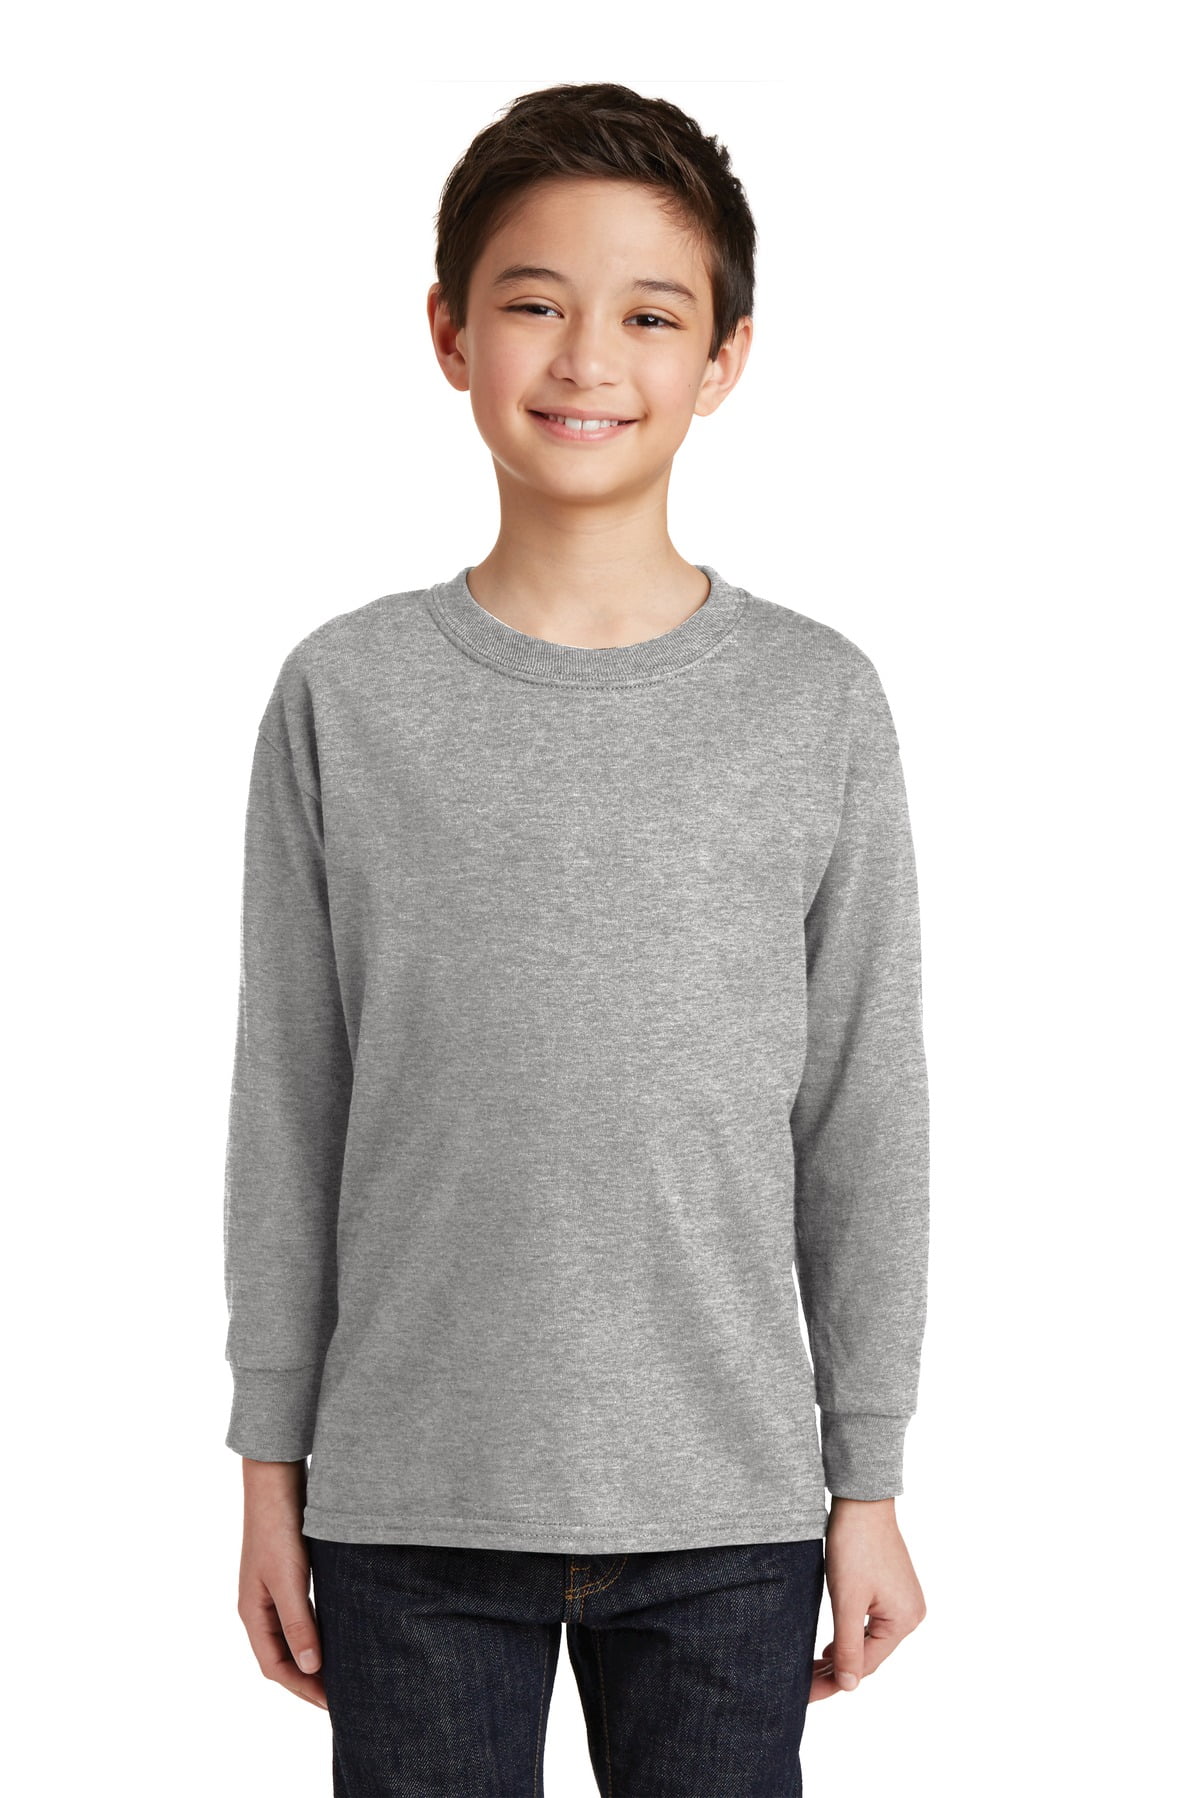 Gildan Youth Heavy Cotton Long-Sleeve T-Shirt